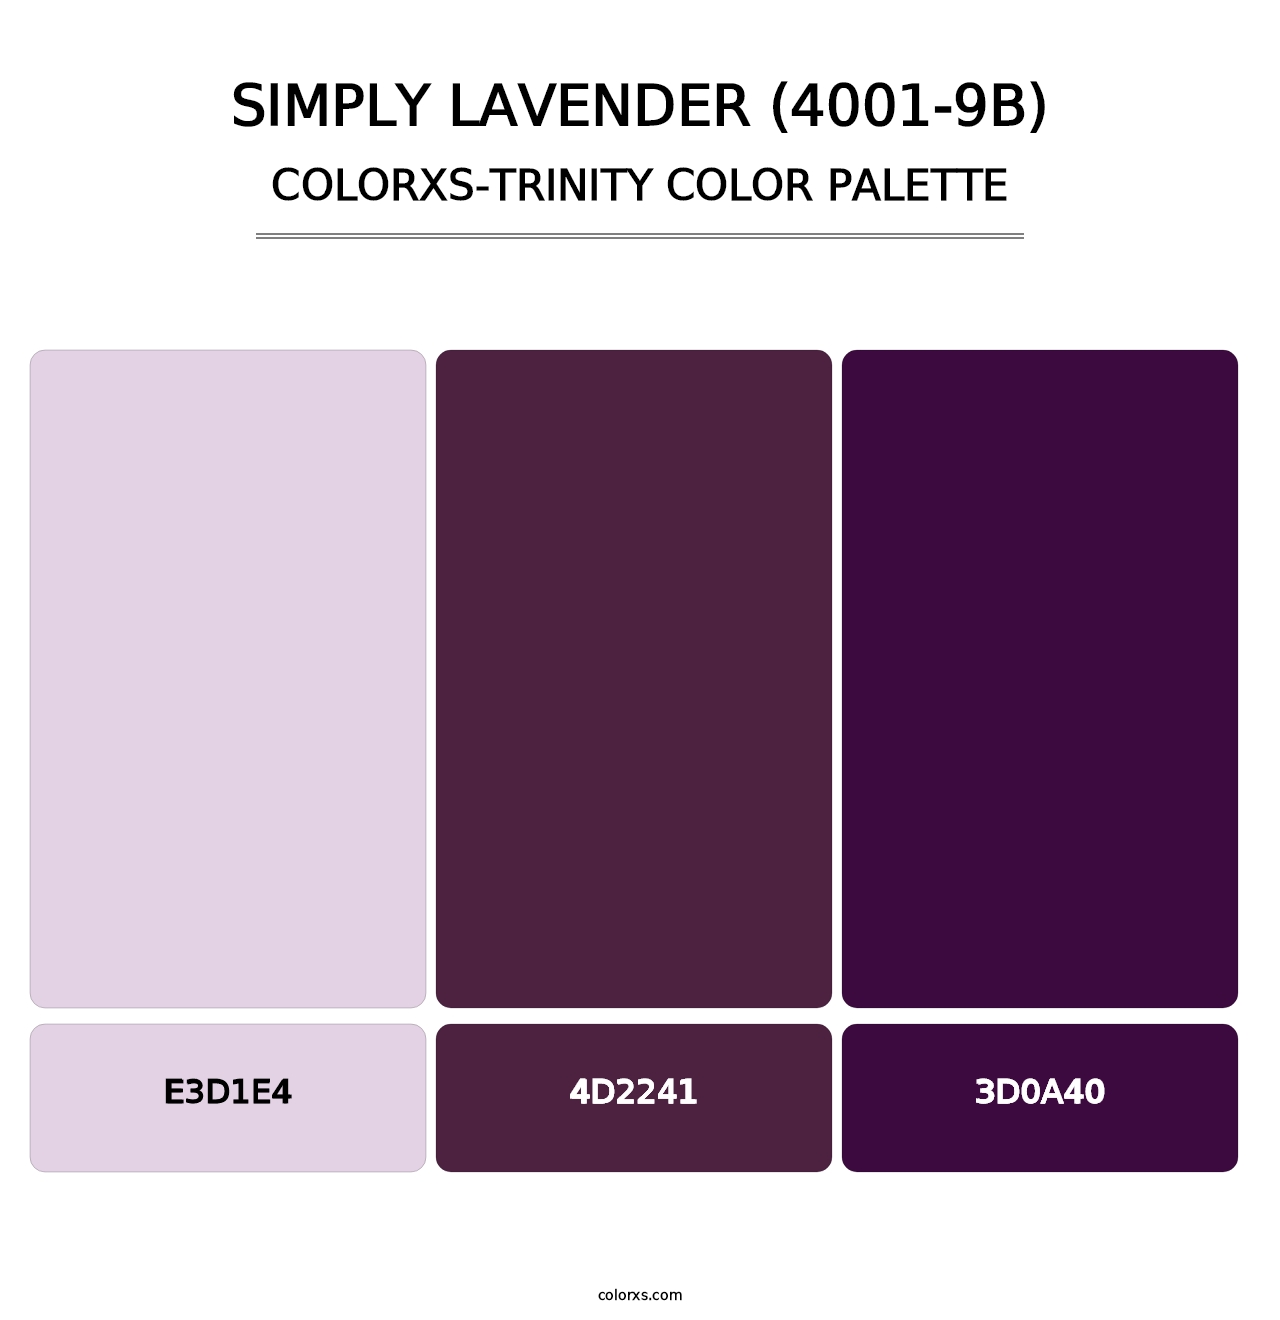 Simply Lavender (4001-9B) - Colorxs Trinity Palette